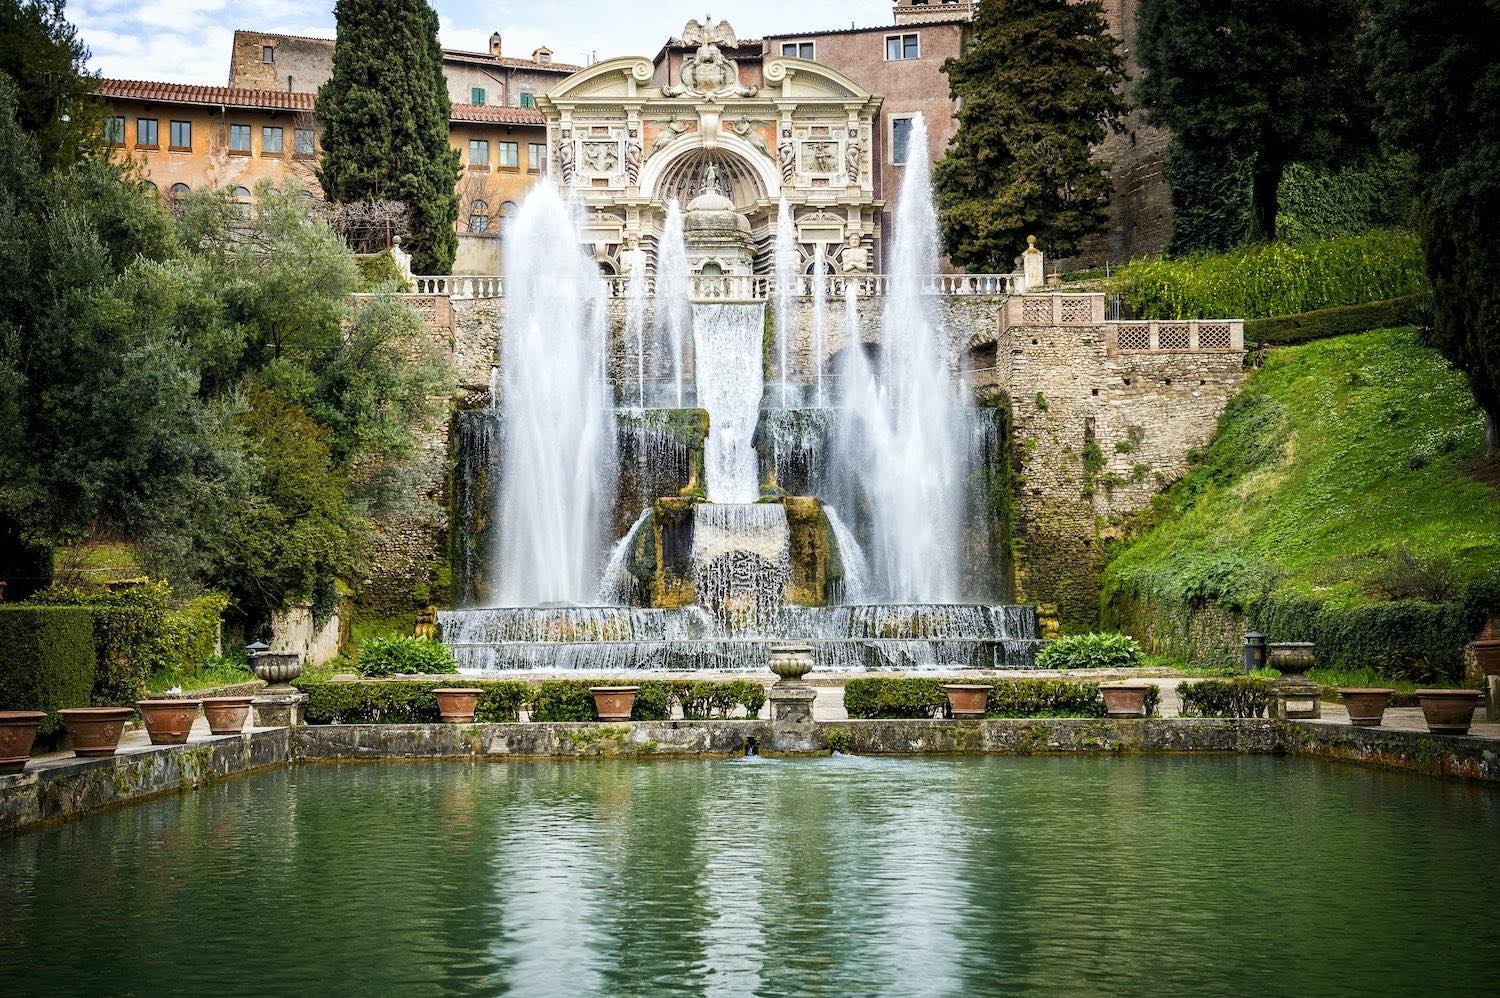 Fountains at the Villa d'Este gardens outside of Rome